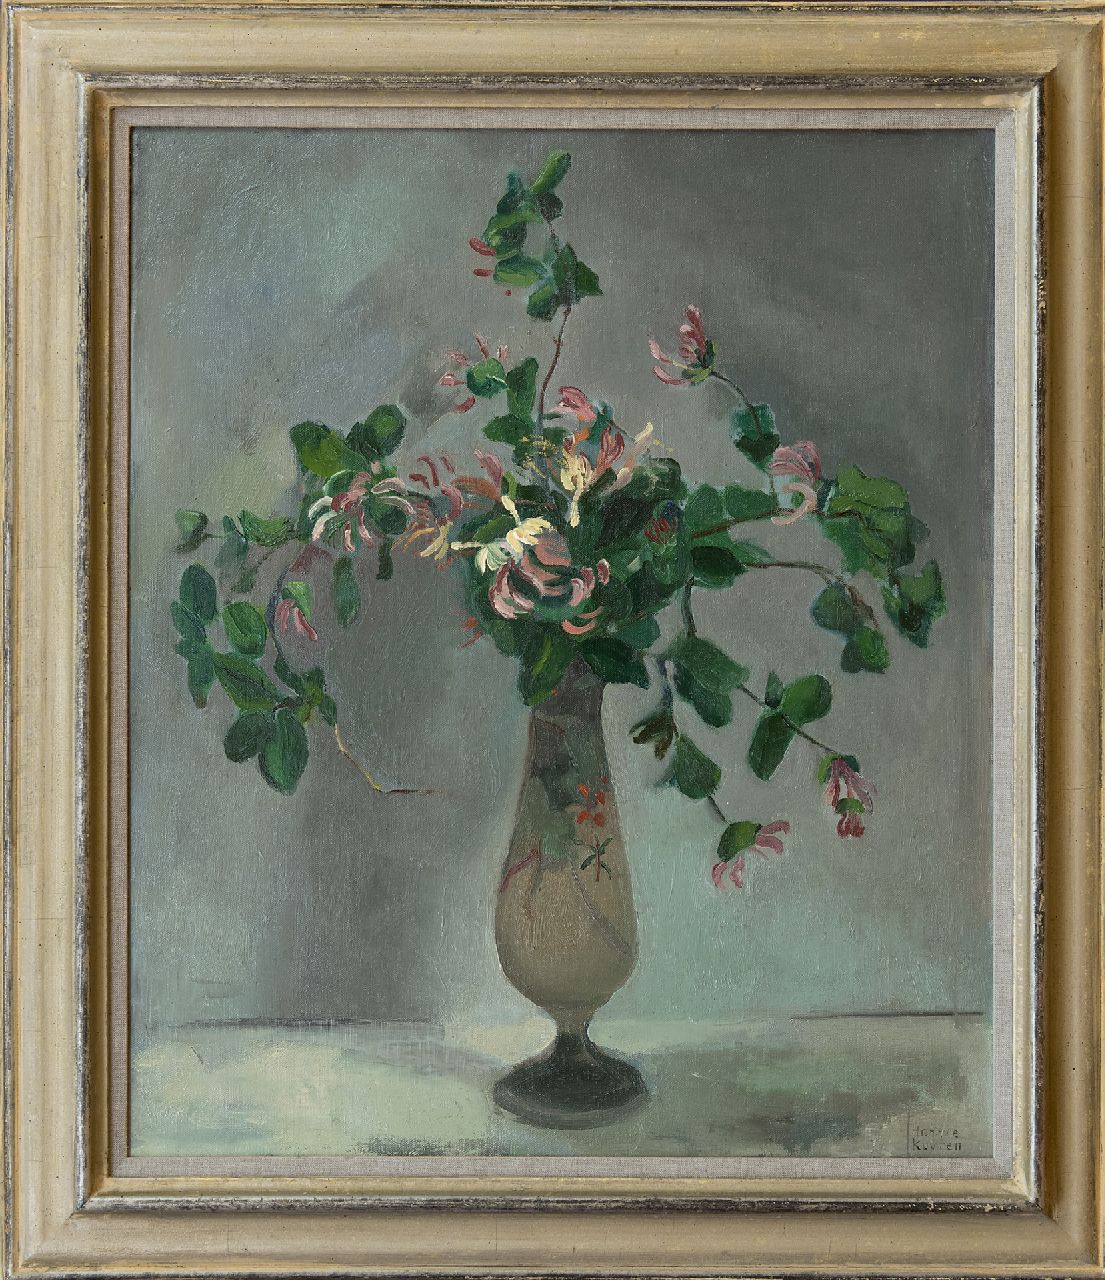 Kuijten H.J.  | Henricus Johannes 'Harrie' Kuijten | Paintings offered for sale | Honeysuckle in a vase, oil on canvas 66.4 x 55.5 cm, signed l.r.